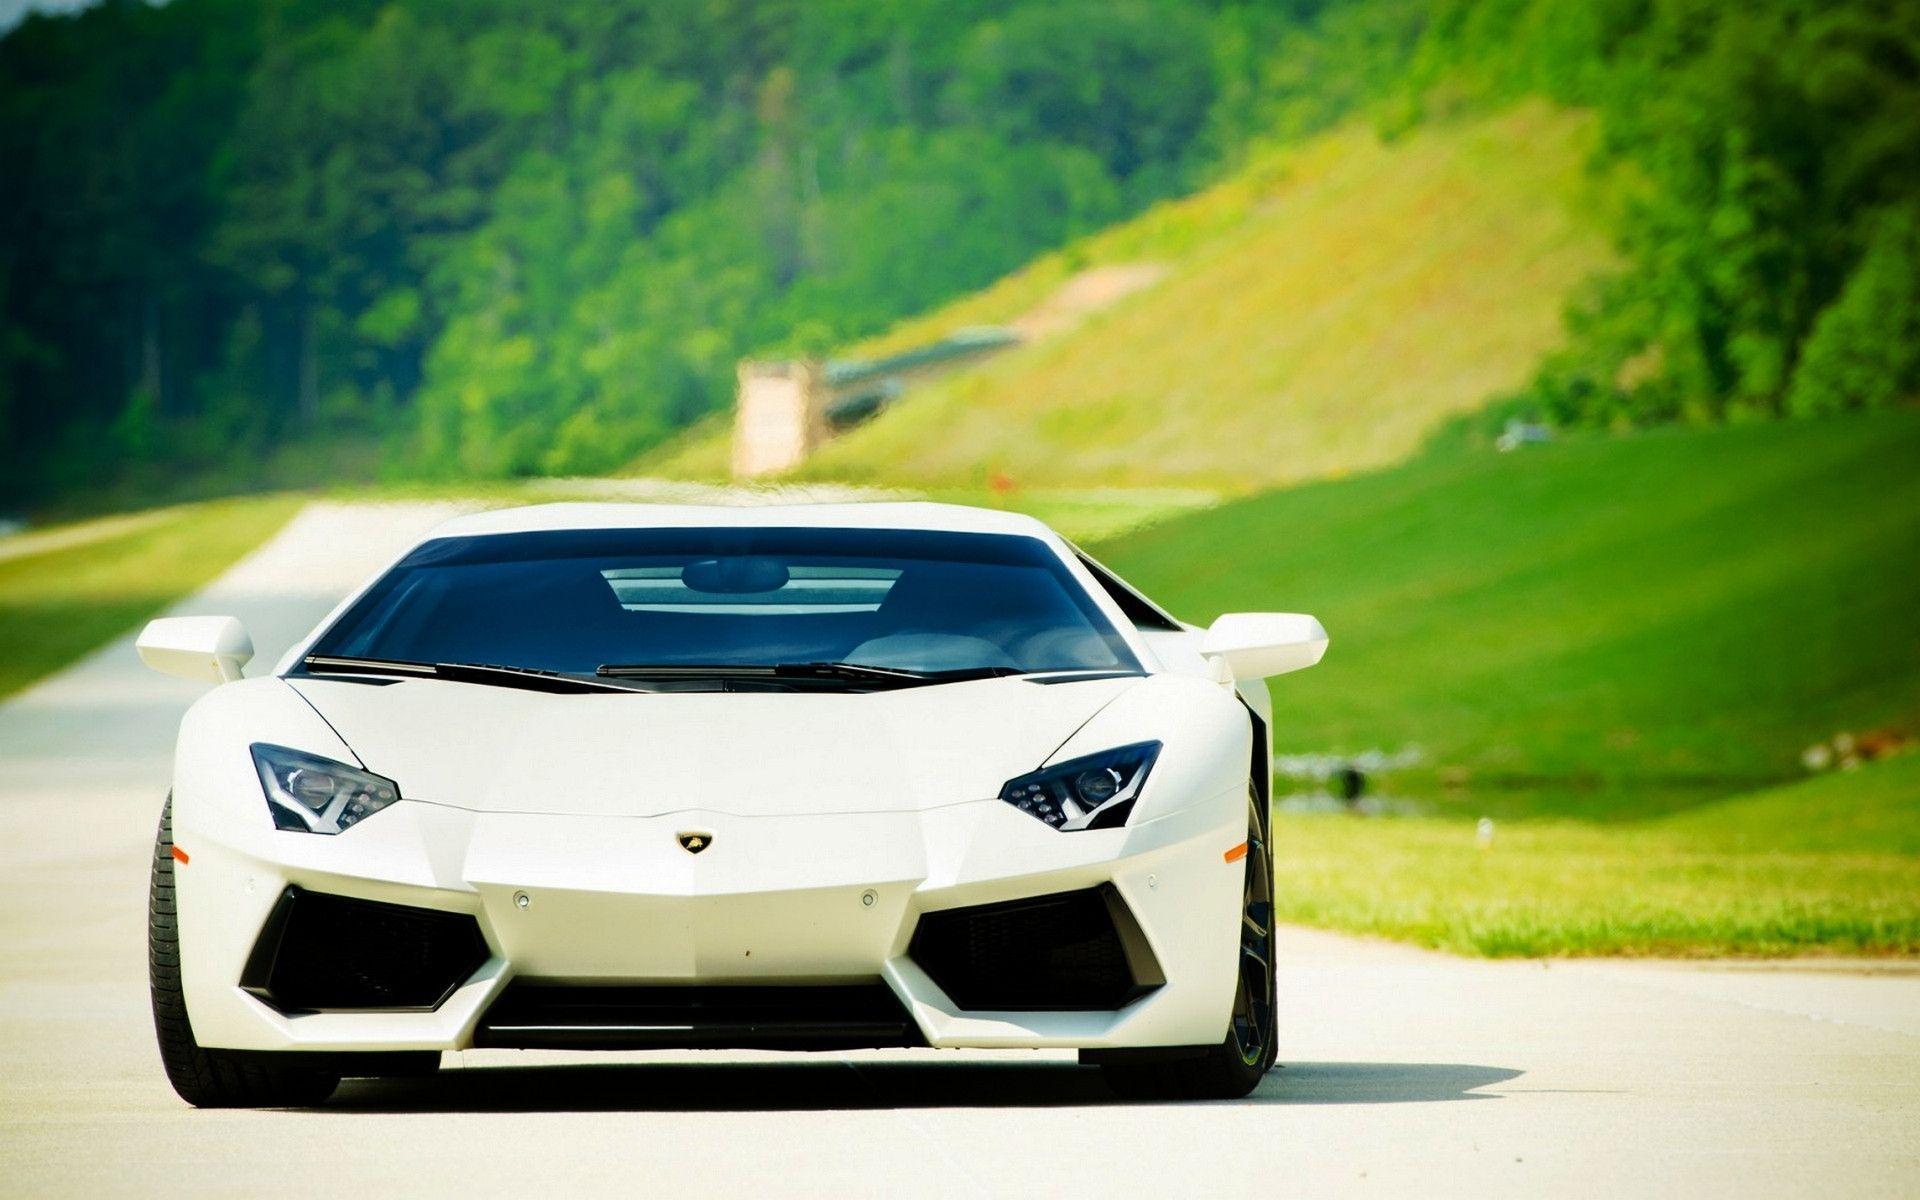 Lamborghini Cars Wallpaper Free Download HD Latest Motors Image